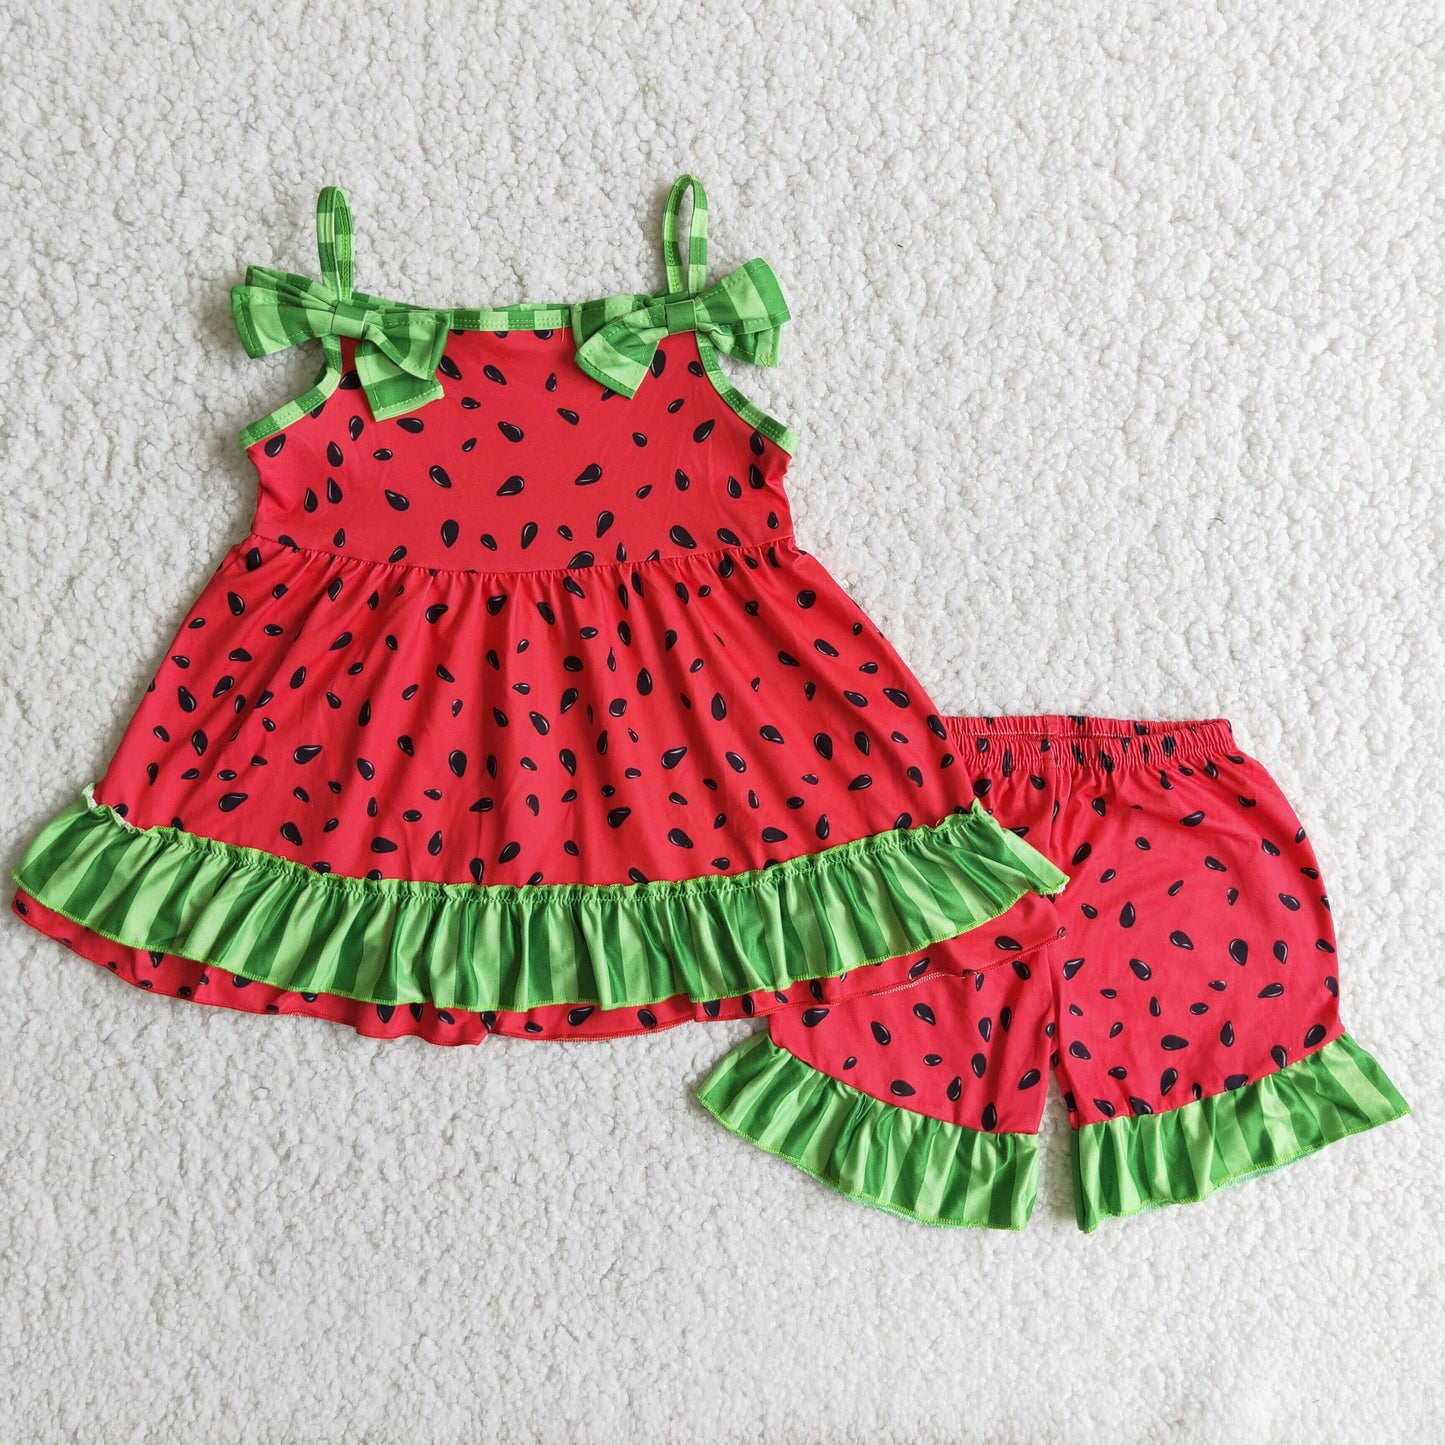 Watermelon tunic ruffle shorts boutique summer clothing set